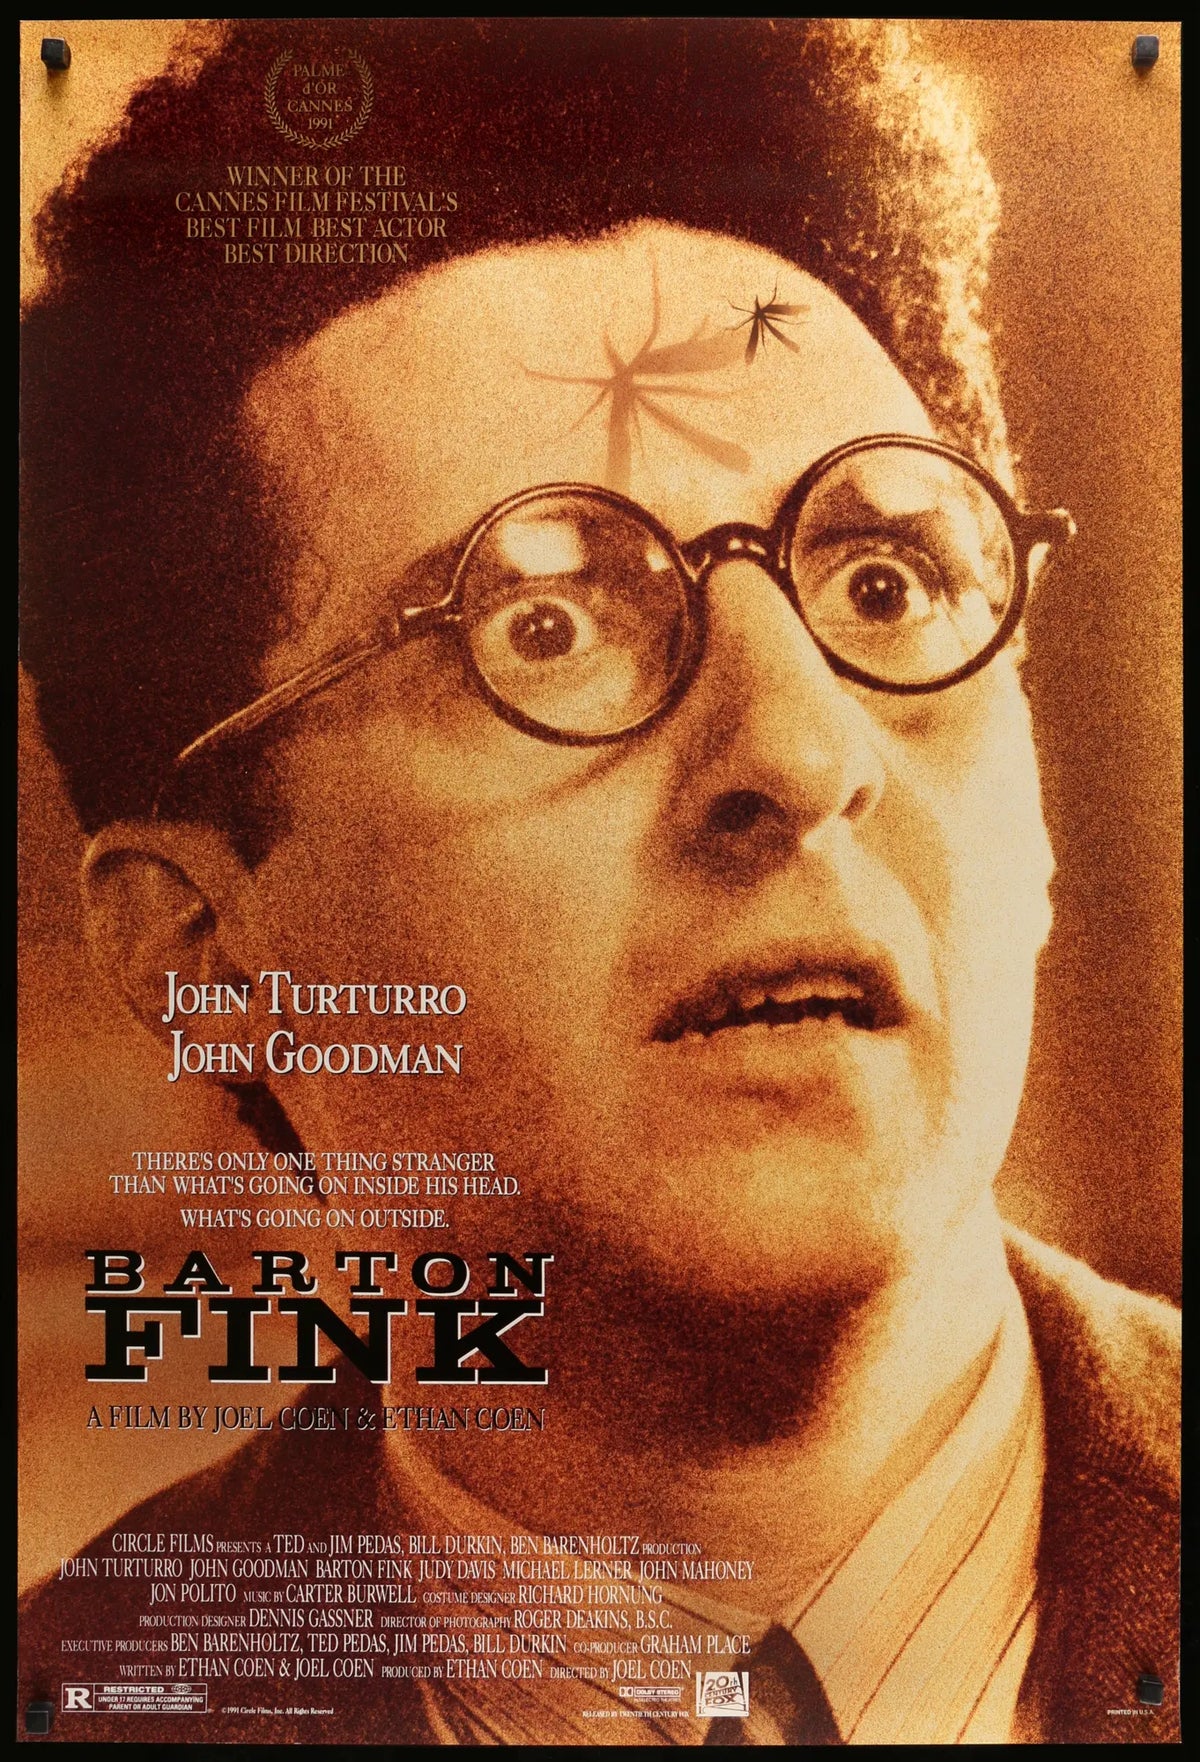 Barton Fink (1991) original movie poster for sale at Original Film Art